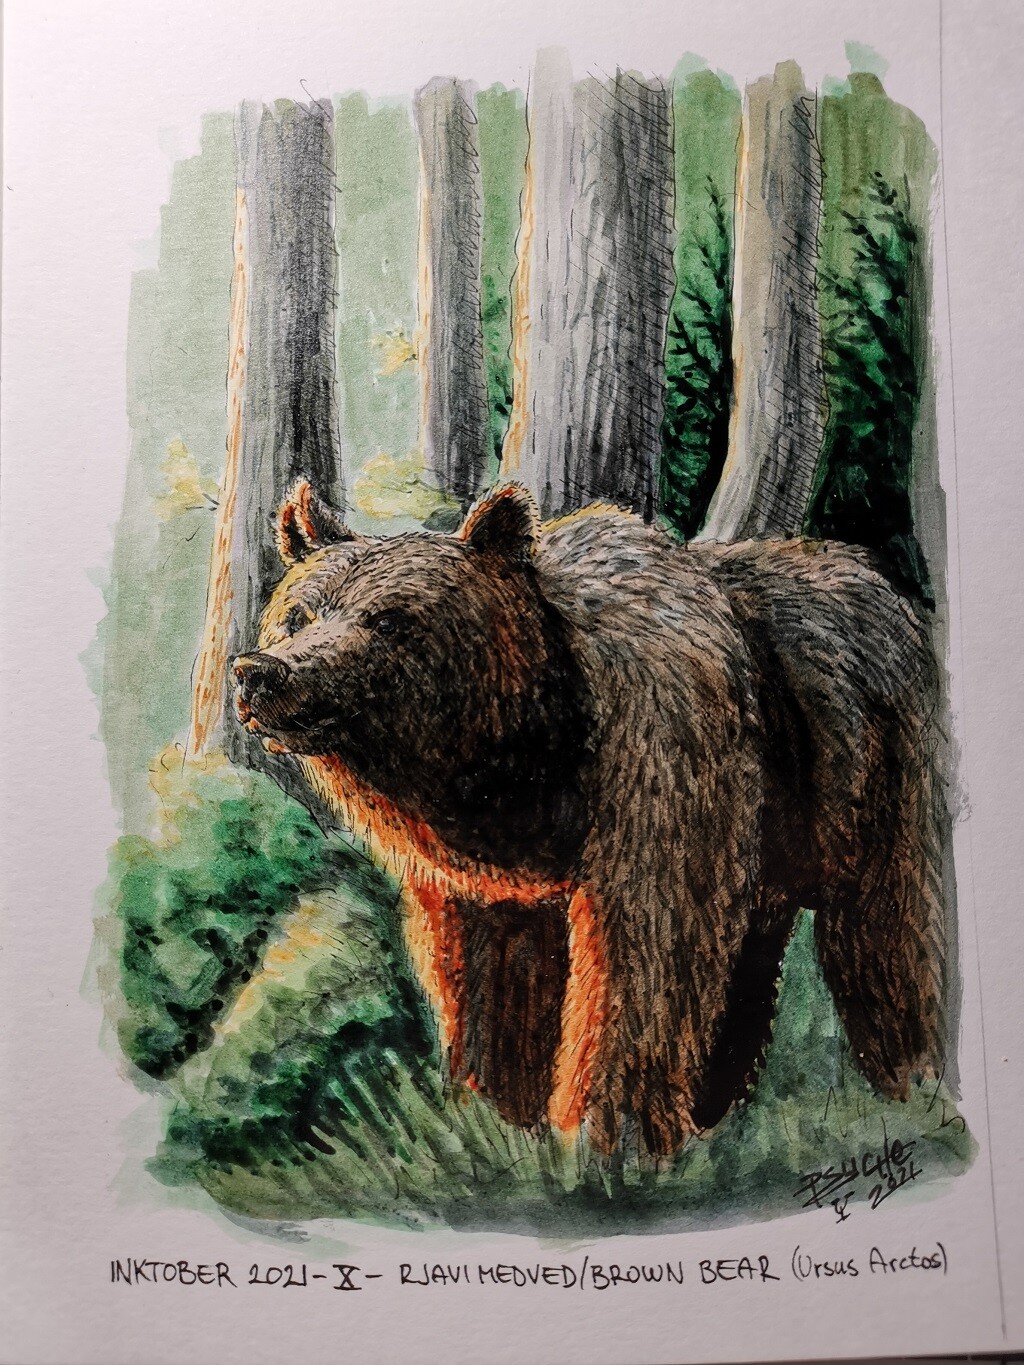 Rjavi Medved/Brown Bear (Ursus Arctos)